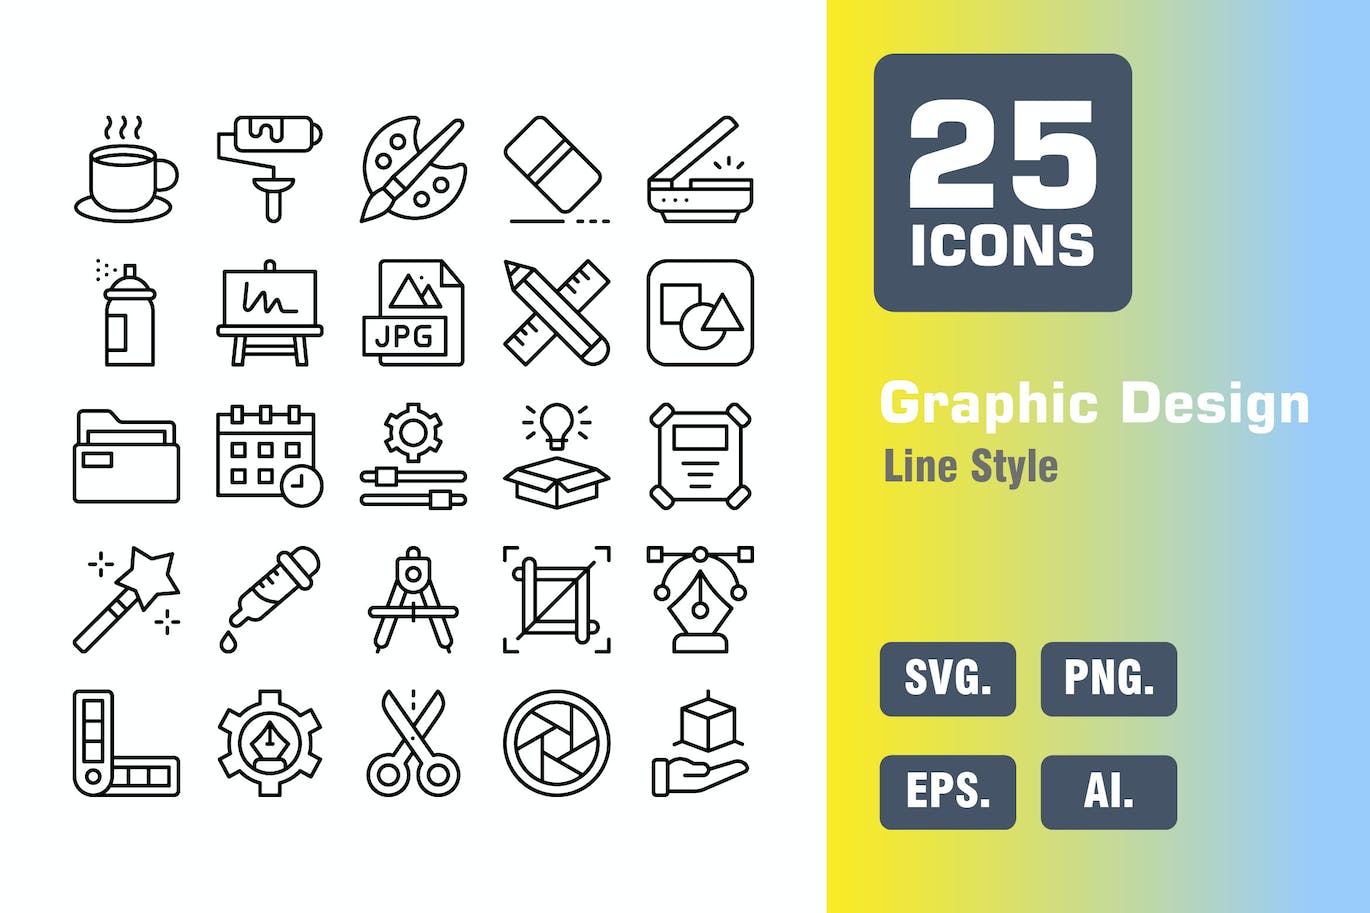 25个平面设计线条图标 Graphic Design Icon Pack in Line Style 图标素材 第1张